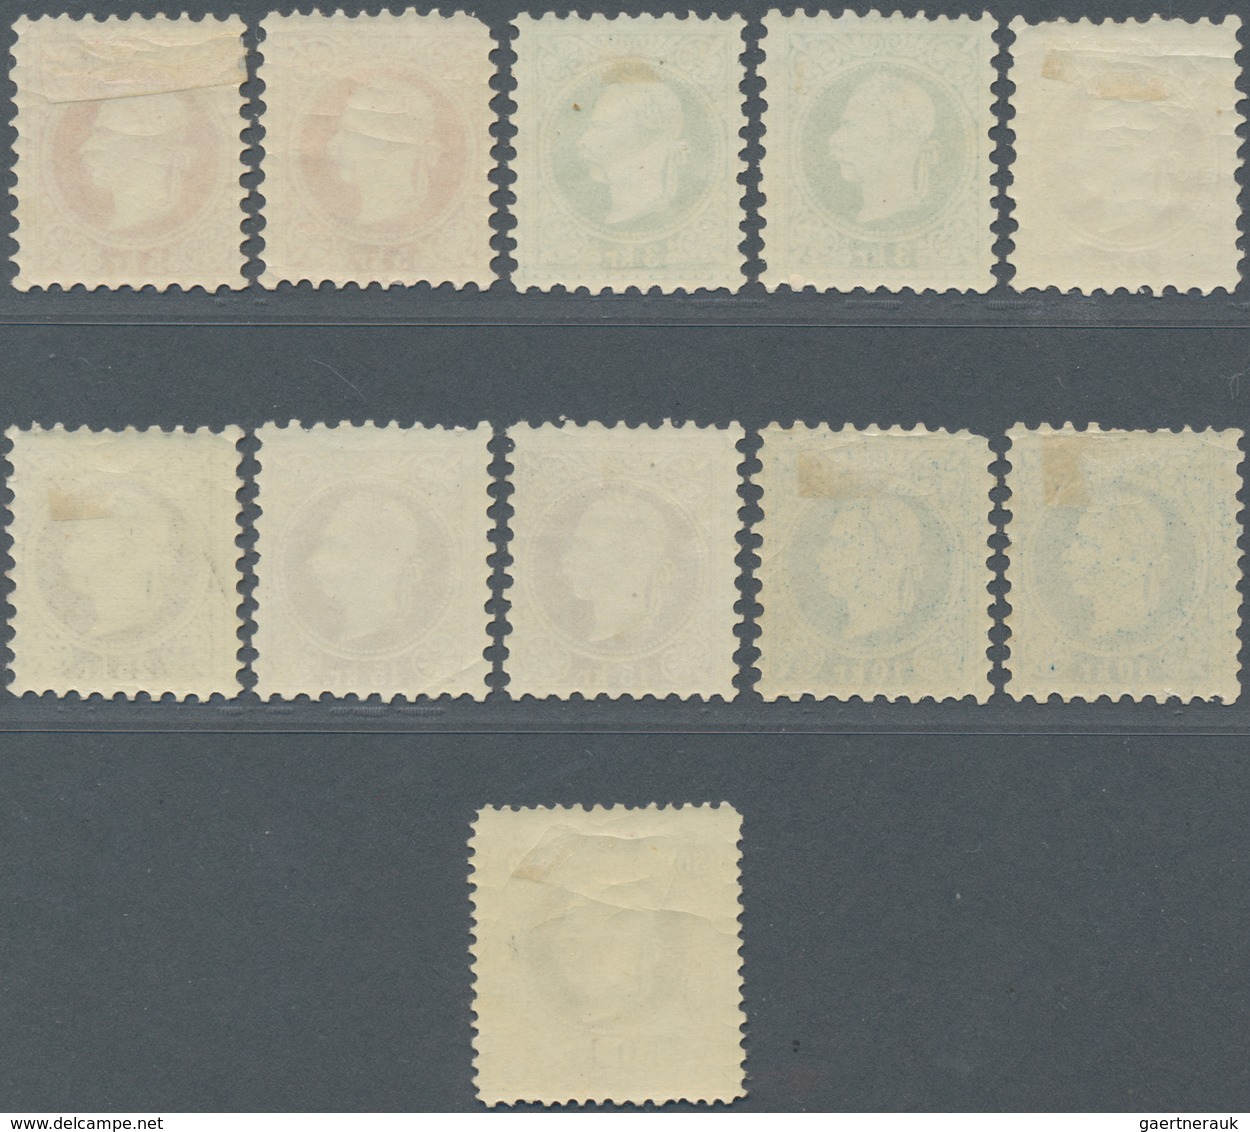 Europa: 1850/1930 (ca.), mainly mint lot on stockcards, comprising e.g. ten mint Switzerland "Helvet